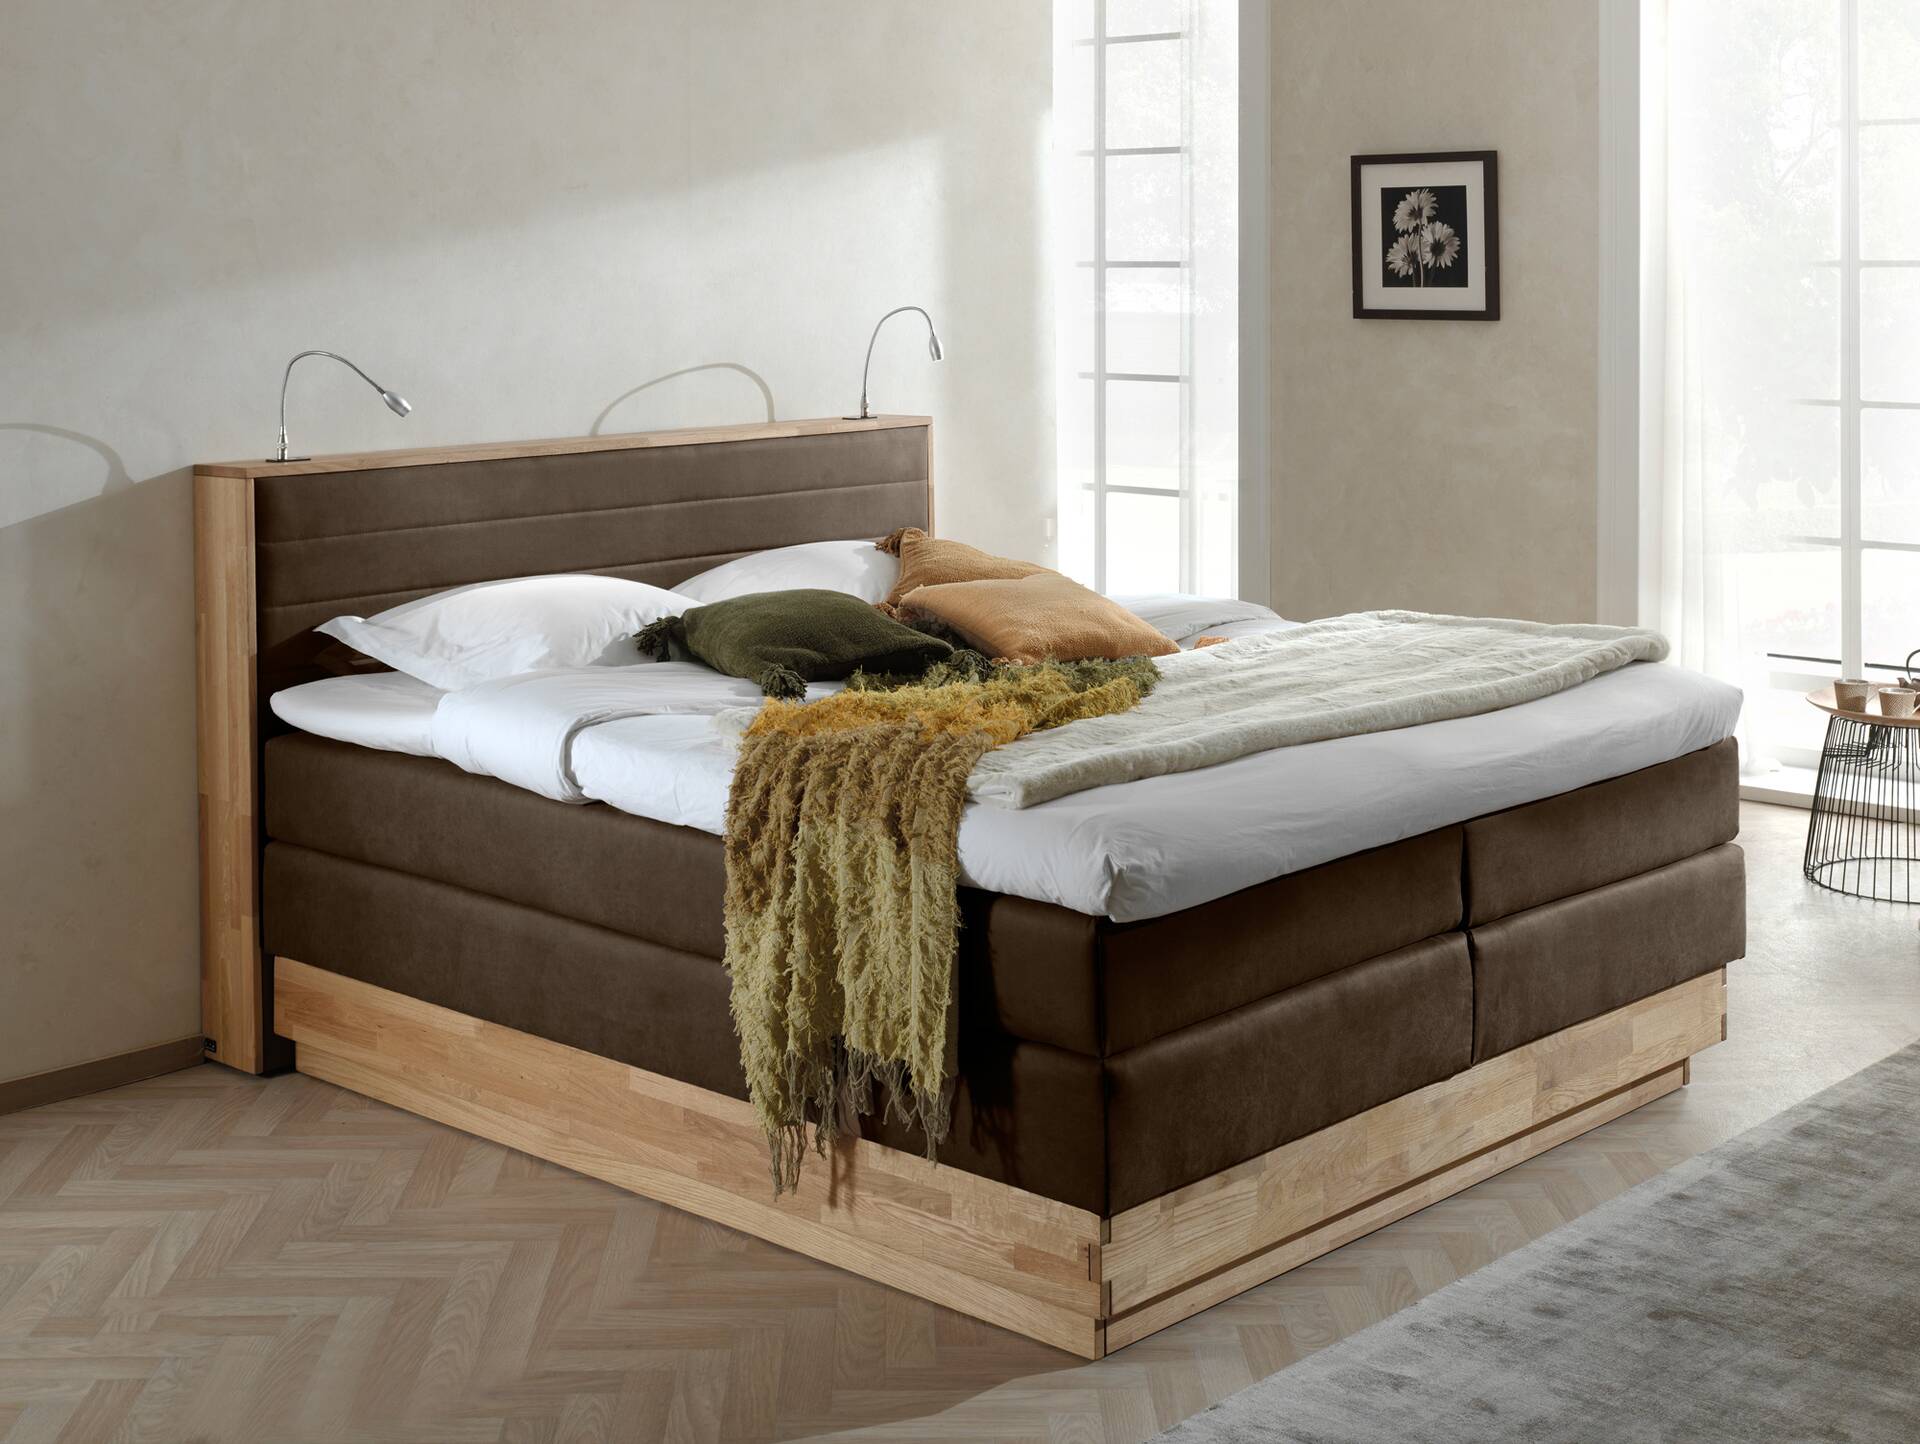 MENOTA Boxspringbett mit Bettkasten, massivem Holzrahmen und Bezug im Vintage Look 160 x 200 cm | braun | Härtegrad 3